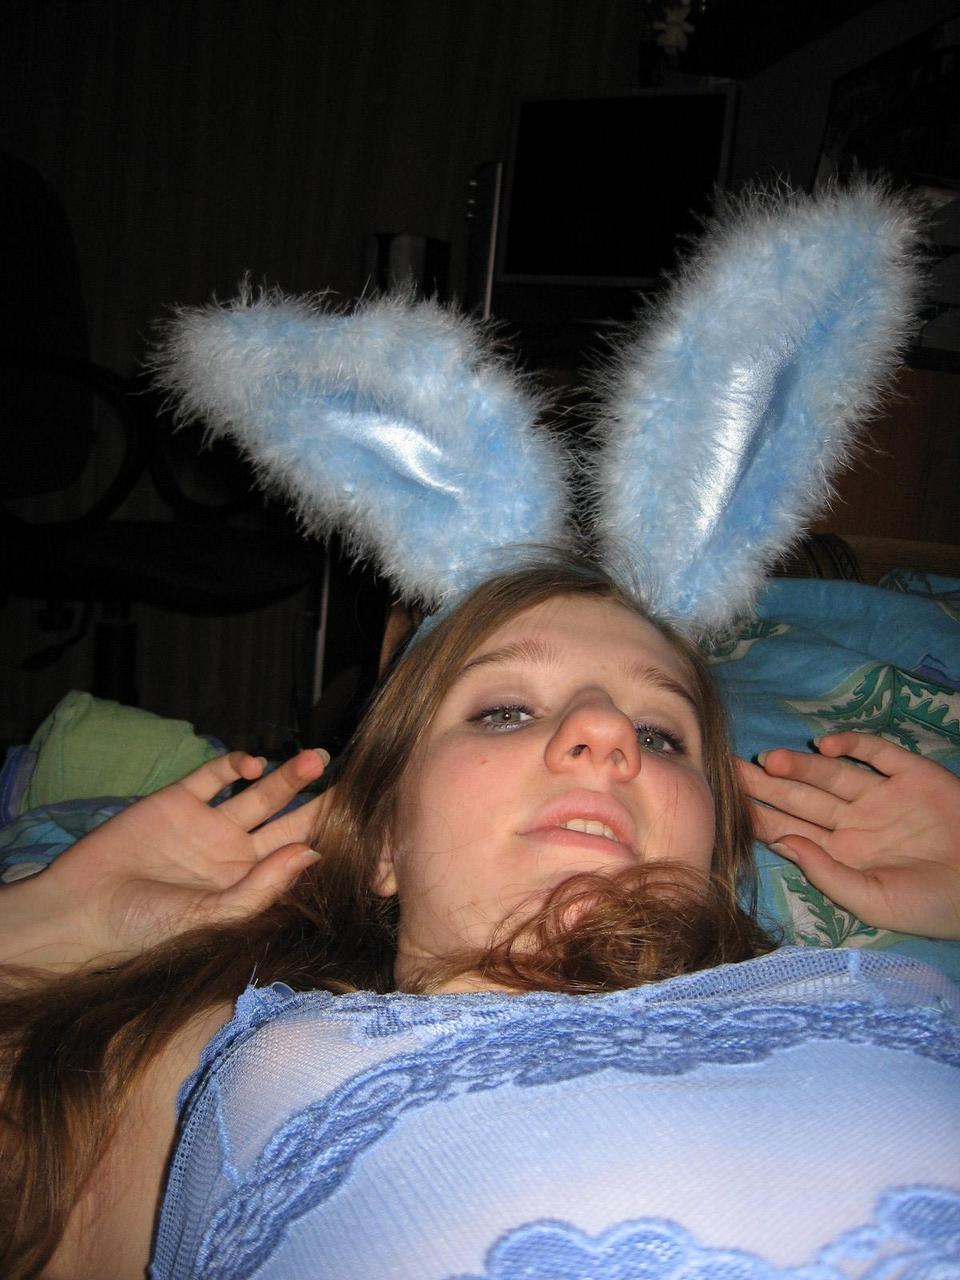 Blue Eared Bunny